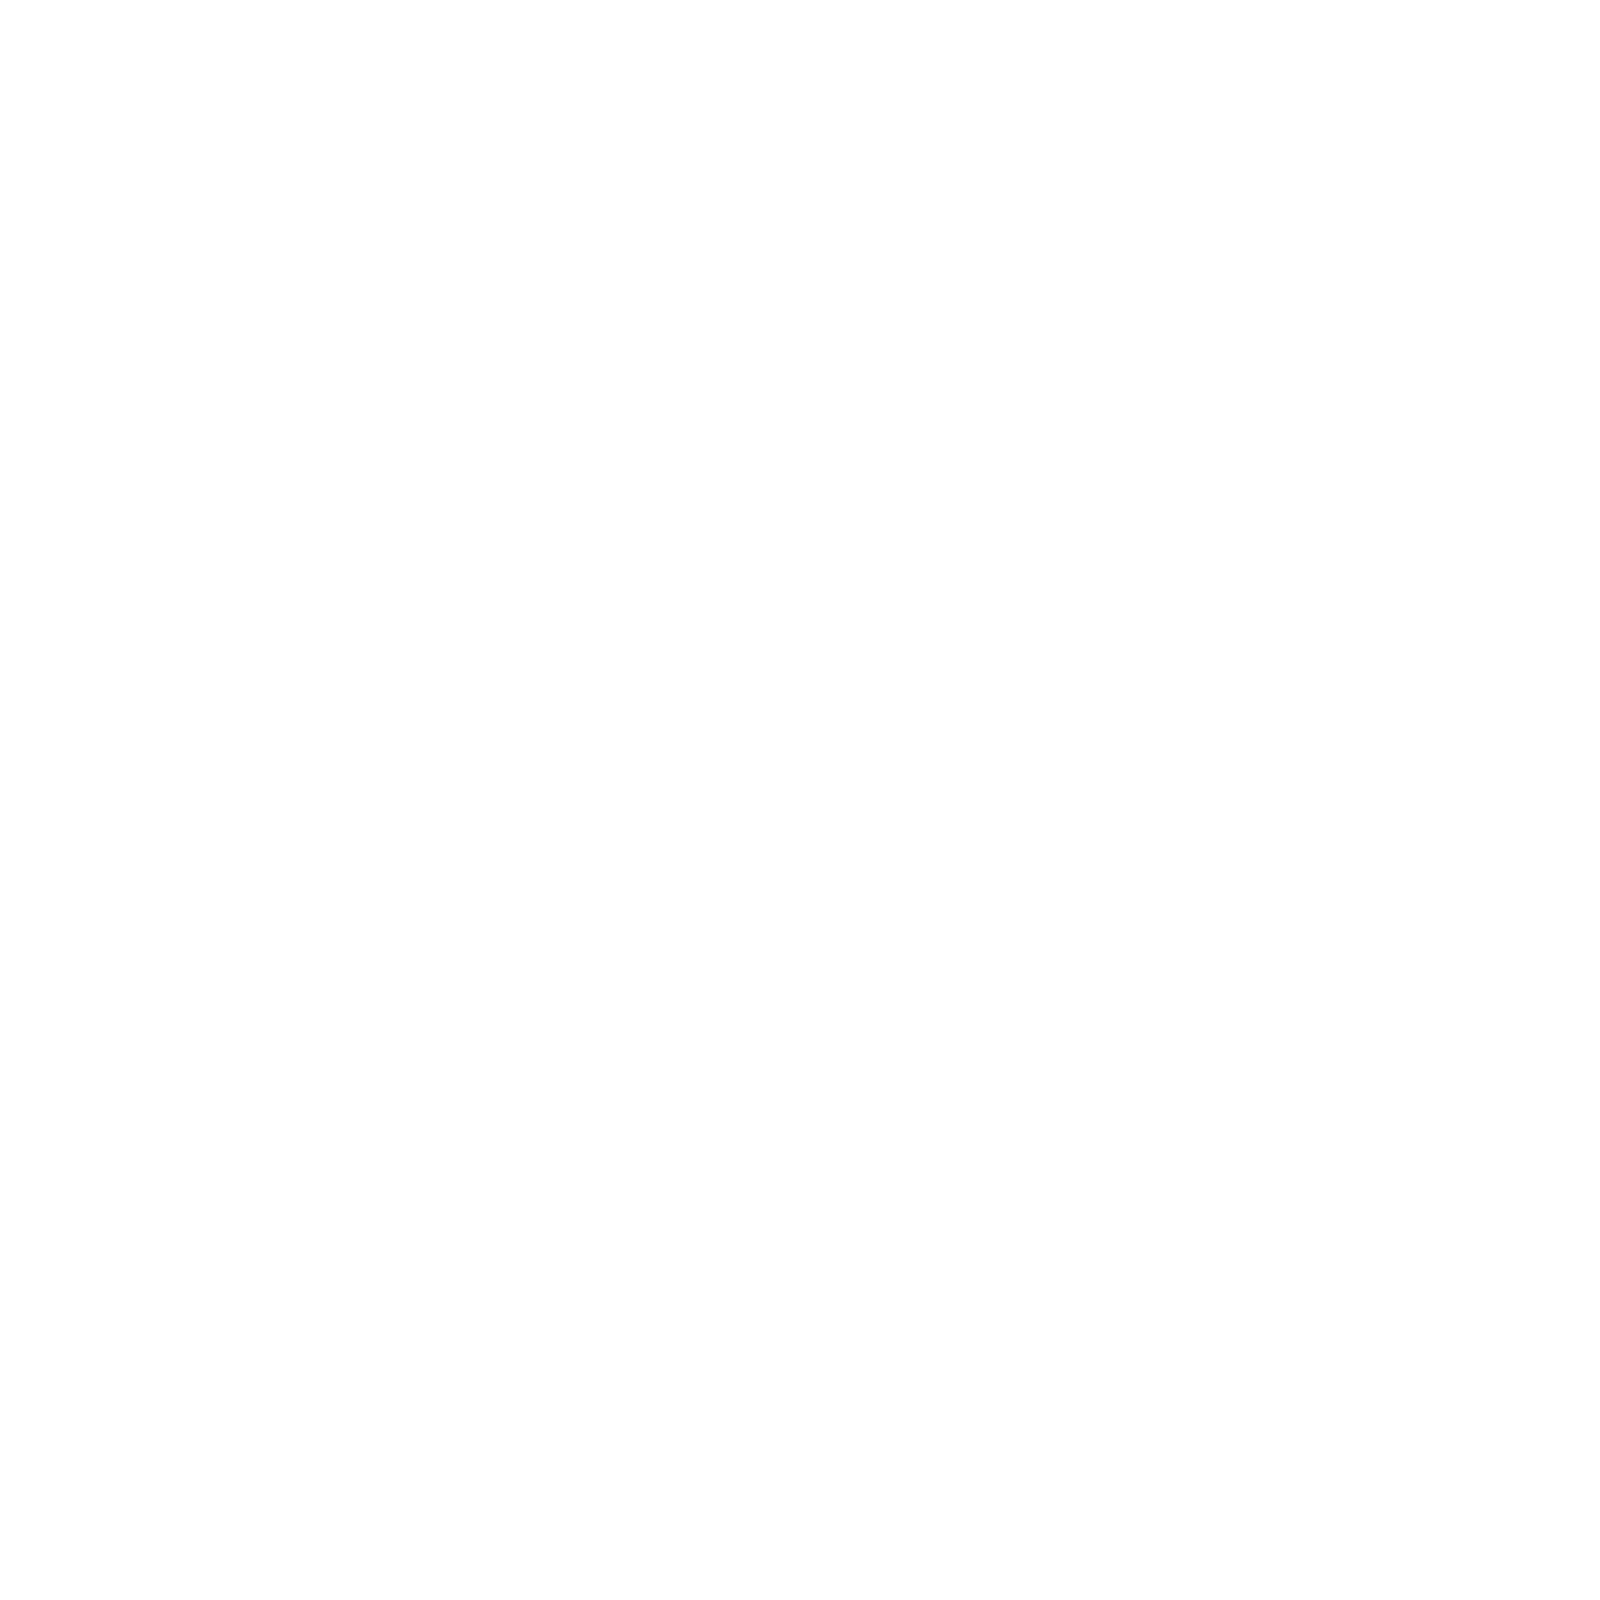 circles images